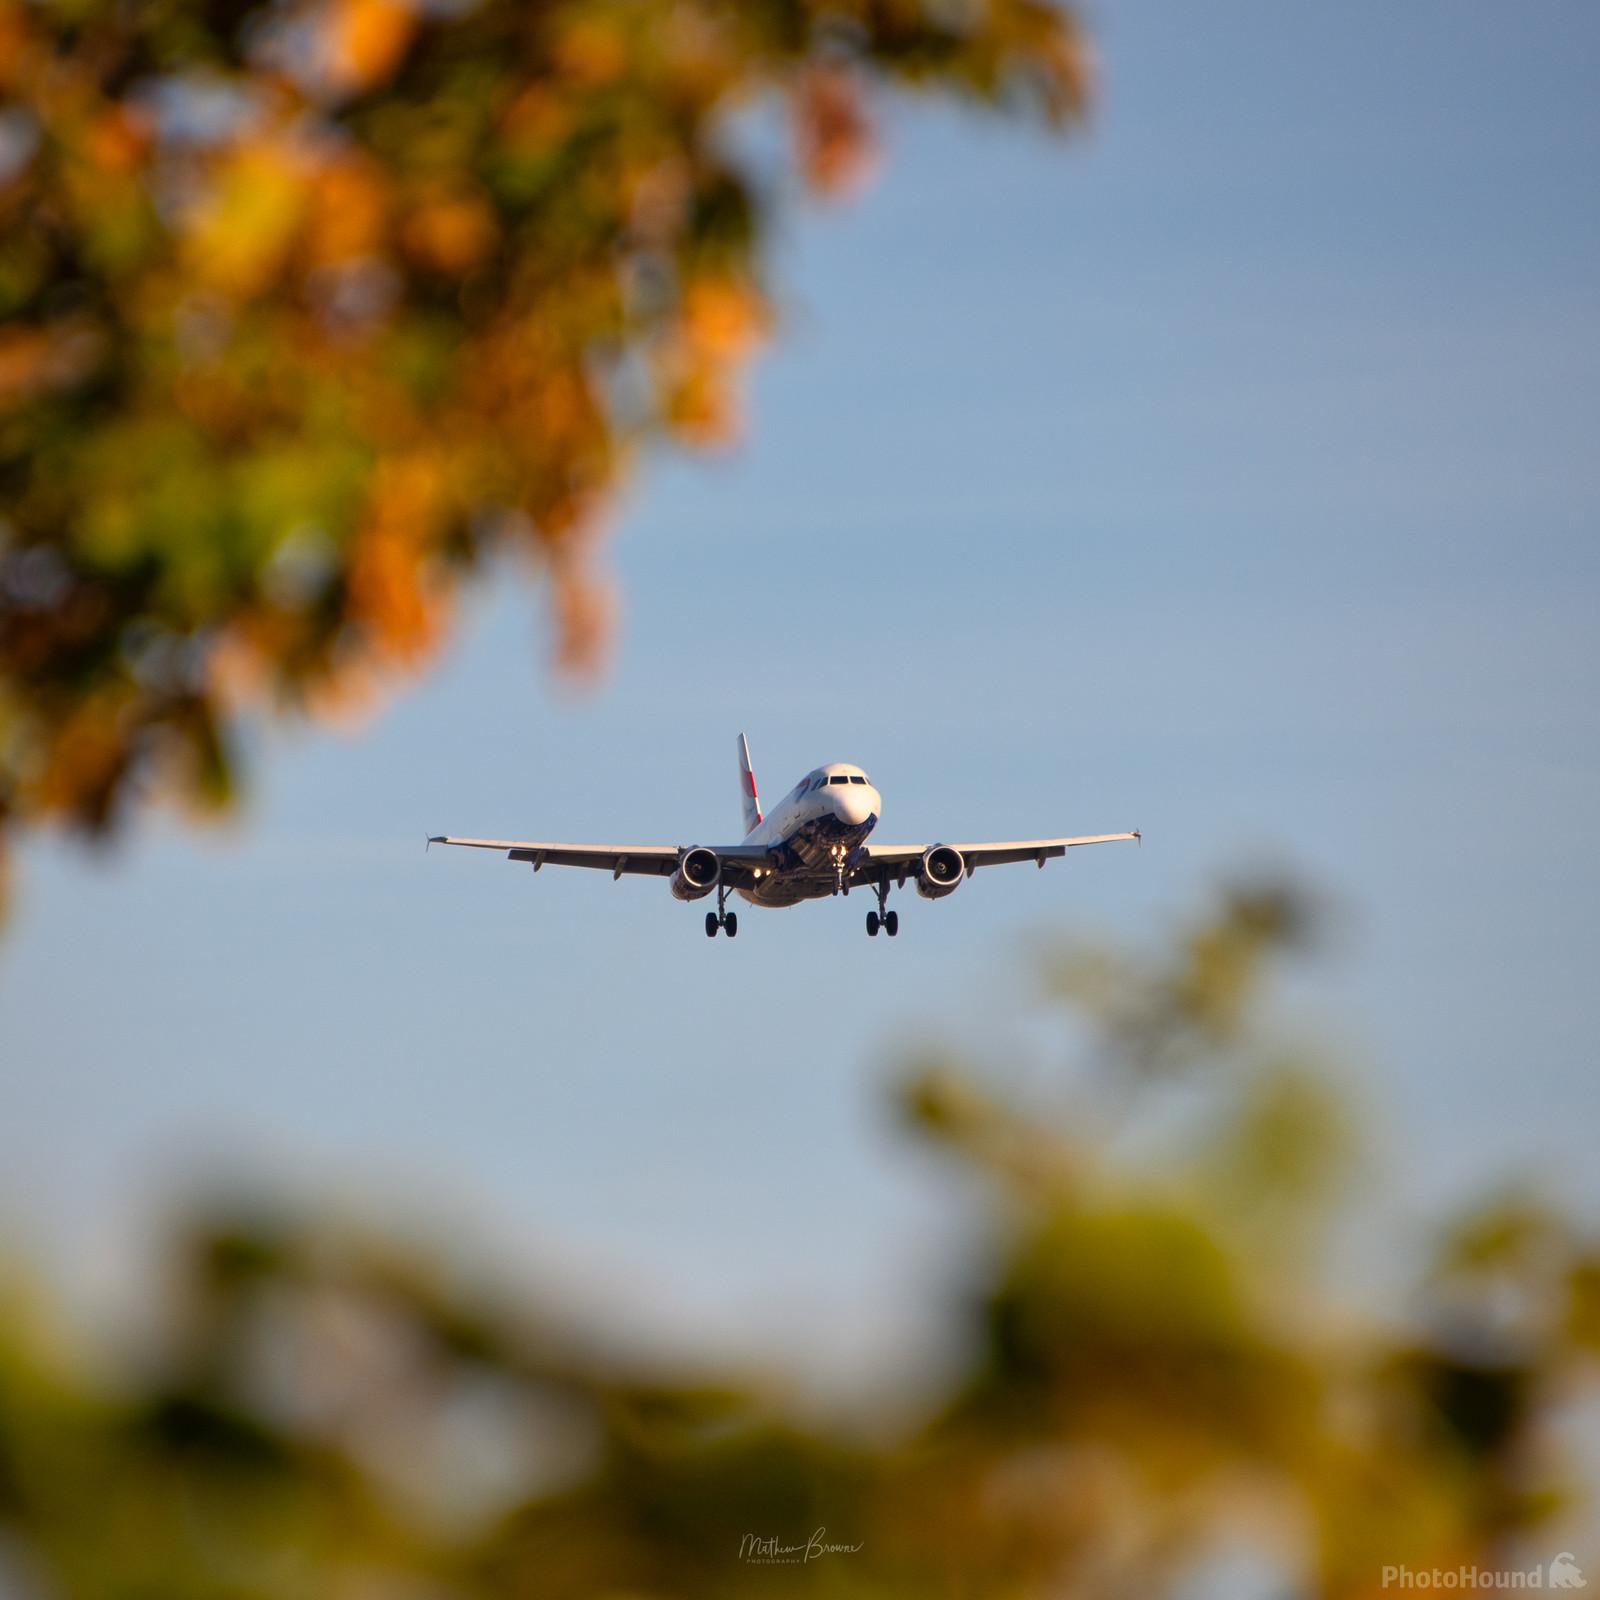 Image of Planespotting @ Premier Inn Heathrow by Mathew Browne